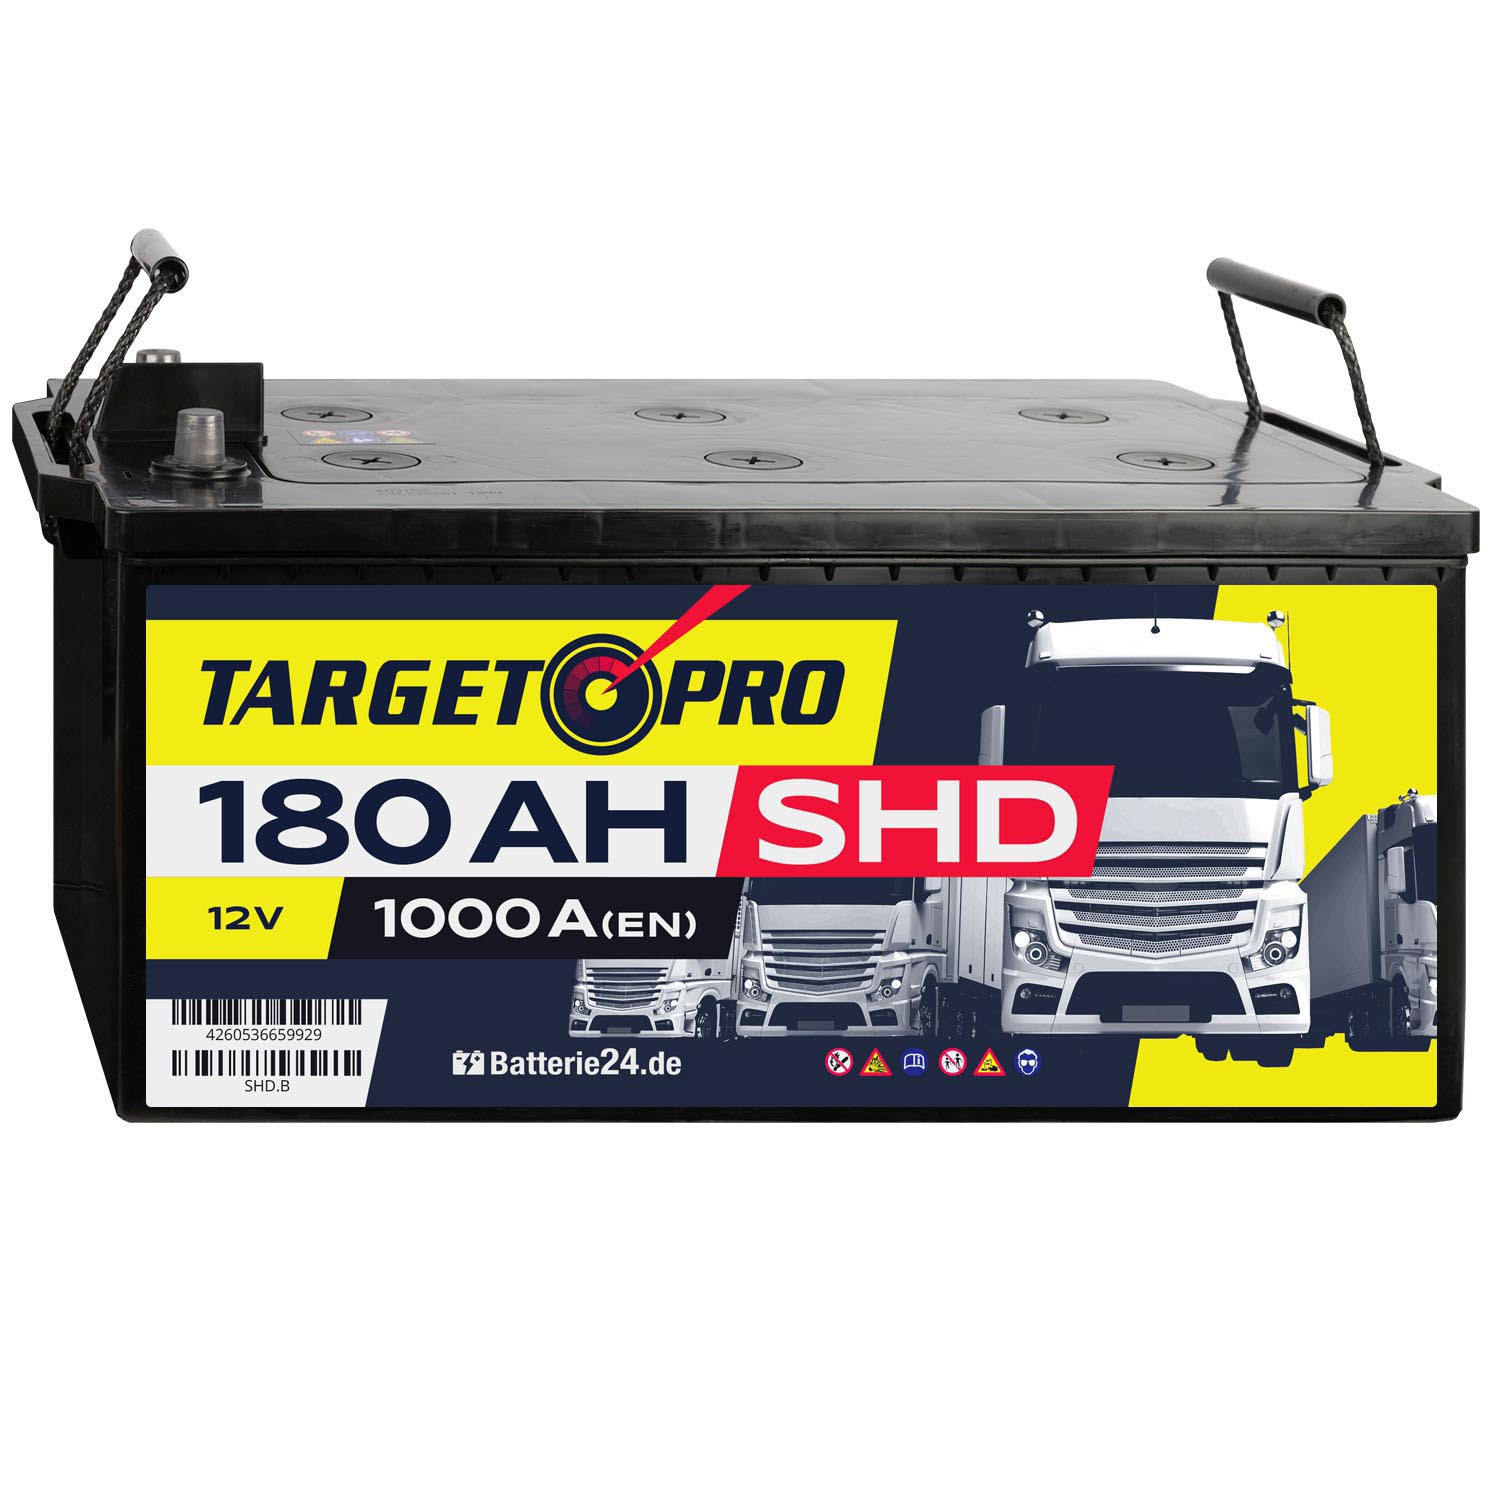 Target Pro SHD 12V 180Ah LKW Batterie